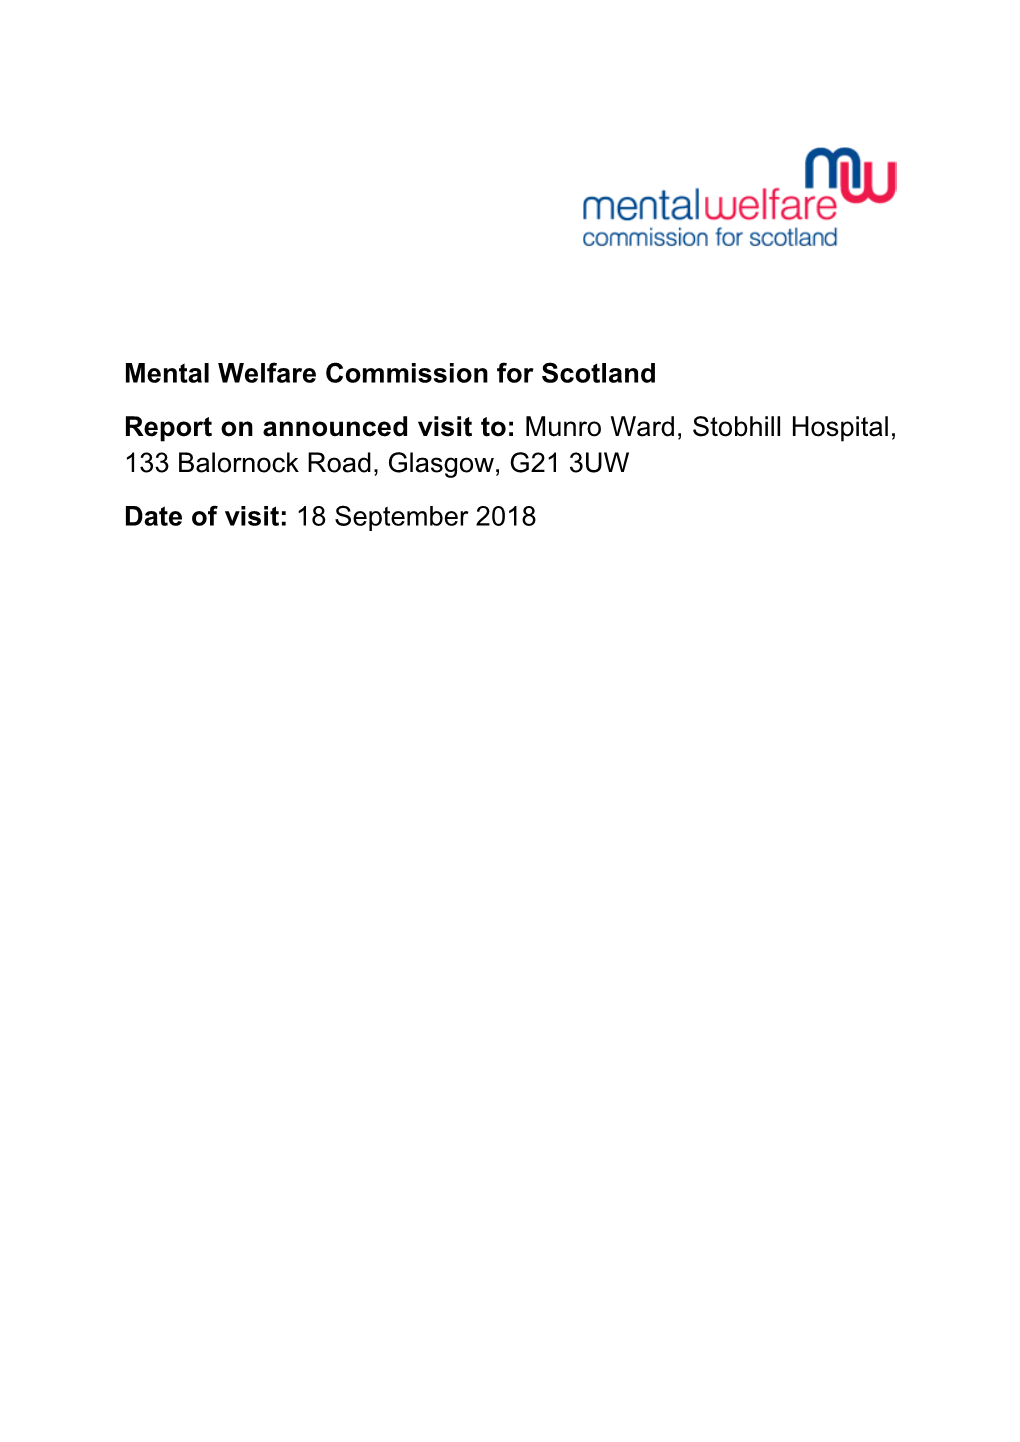 Munro Ward, Stobhill Hospital, 133 Balornock Road, Glasgow, G21 3UW Date of Visit: 18 September 2018